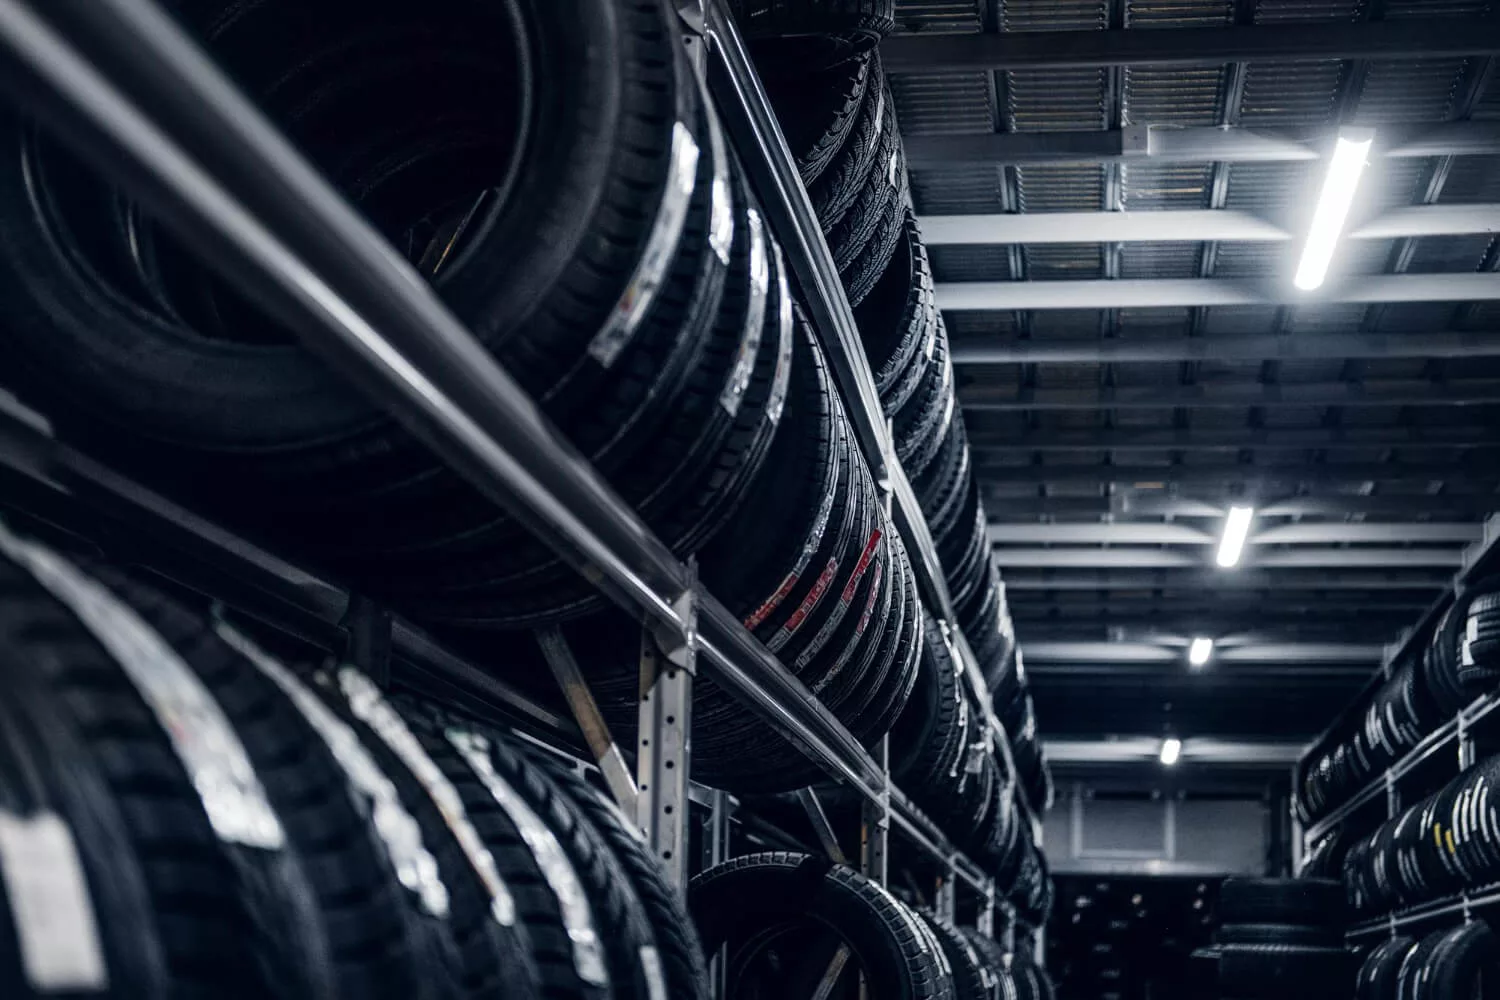 dark-storage-full-big-variety-new-tyres-busy-warehouse